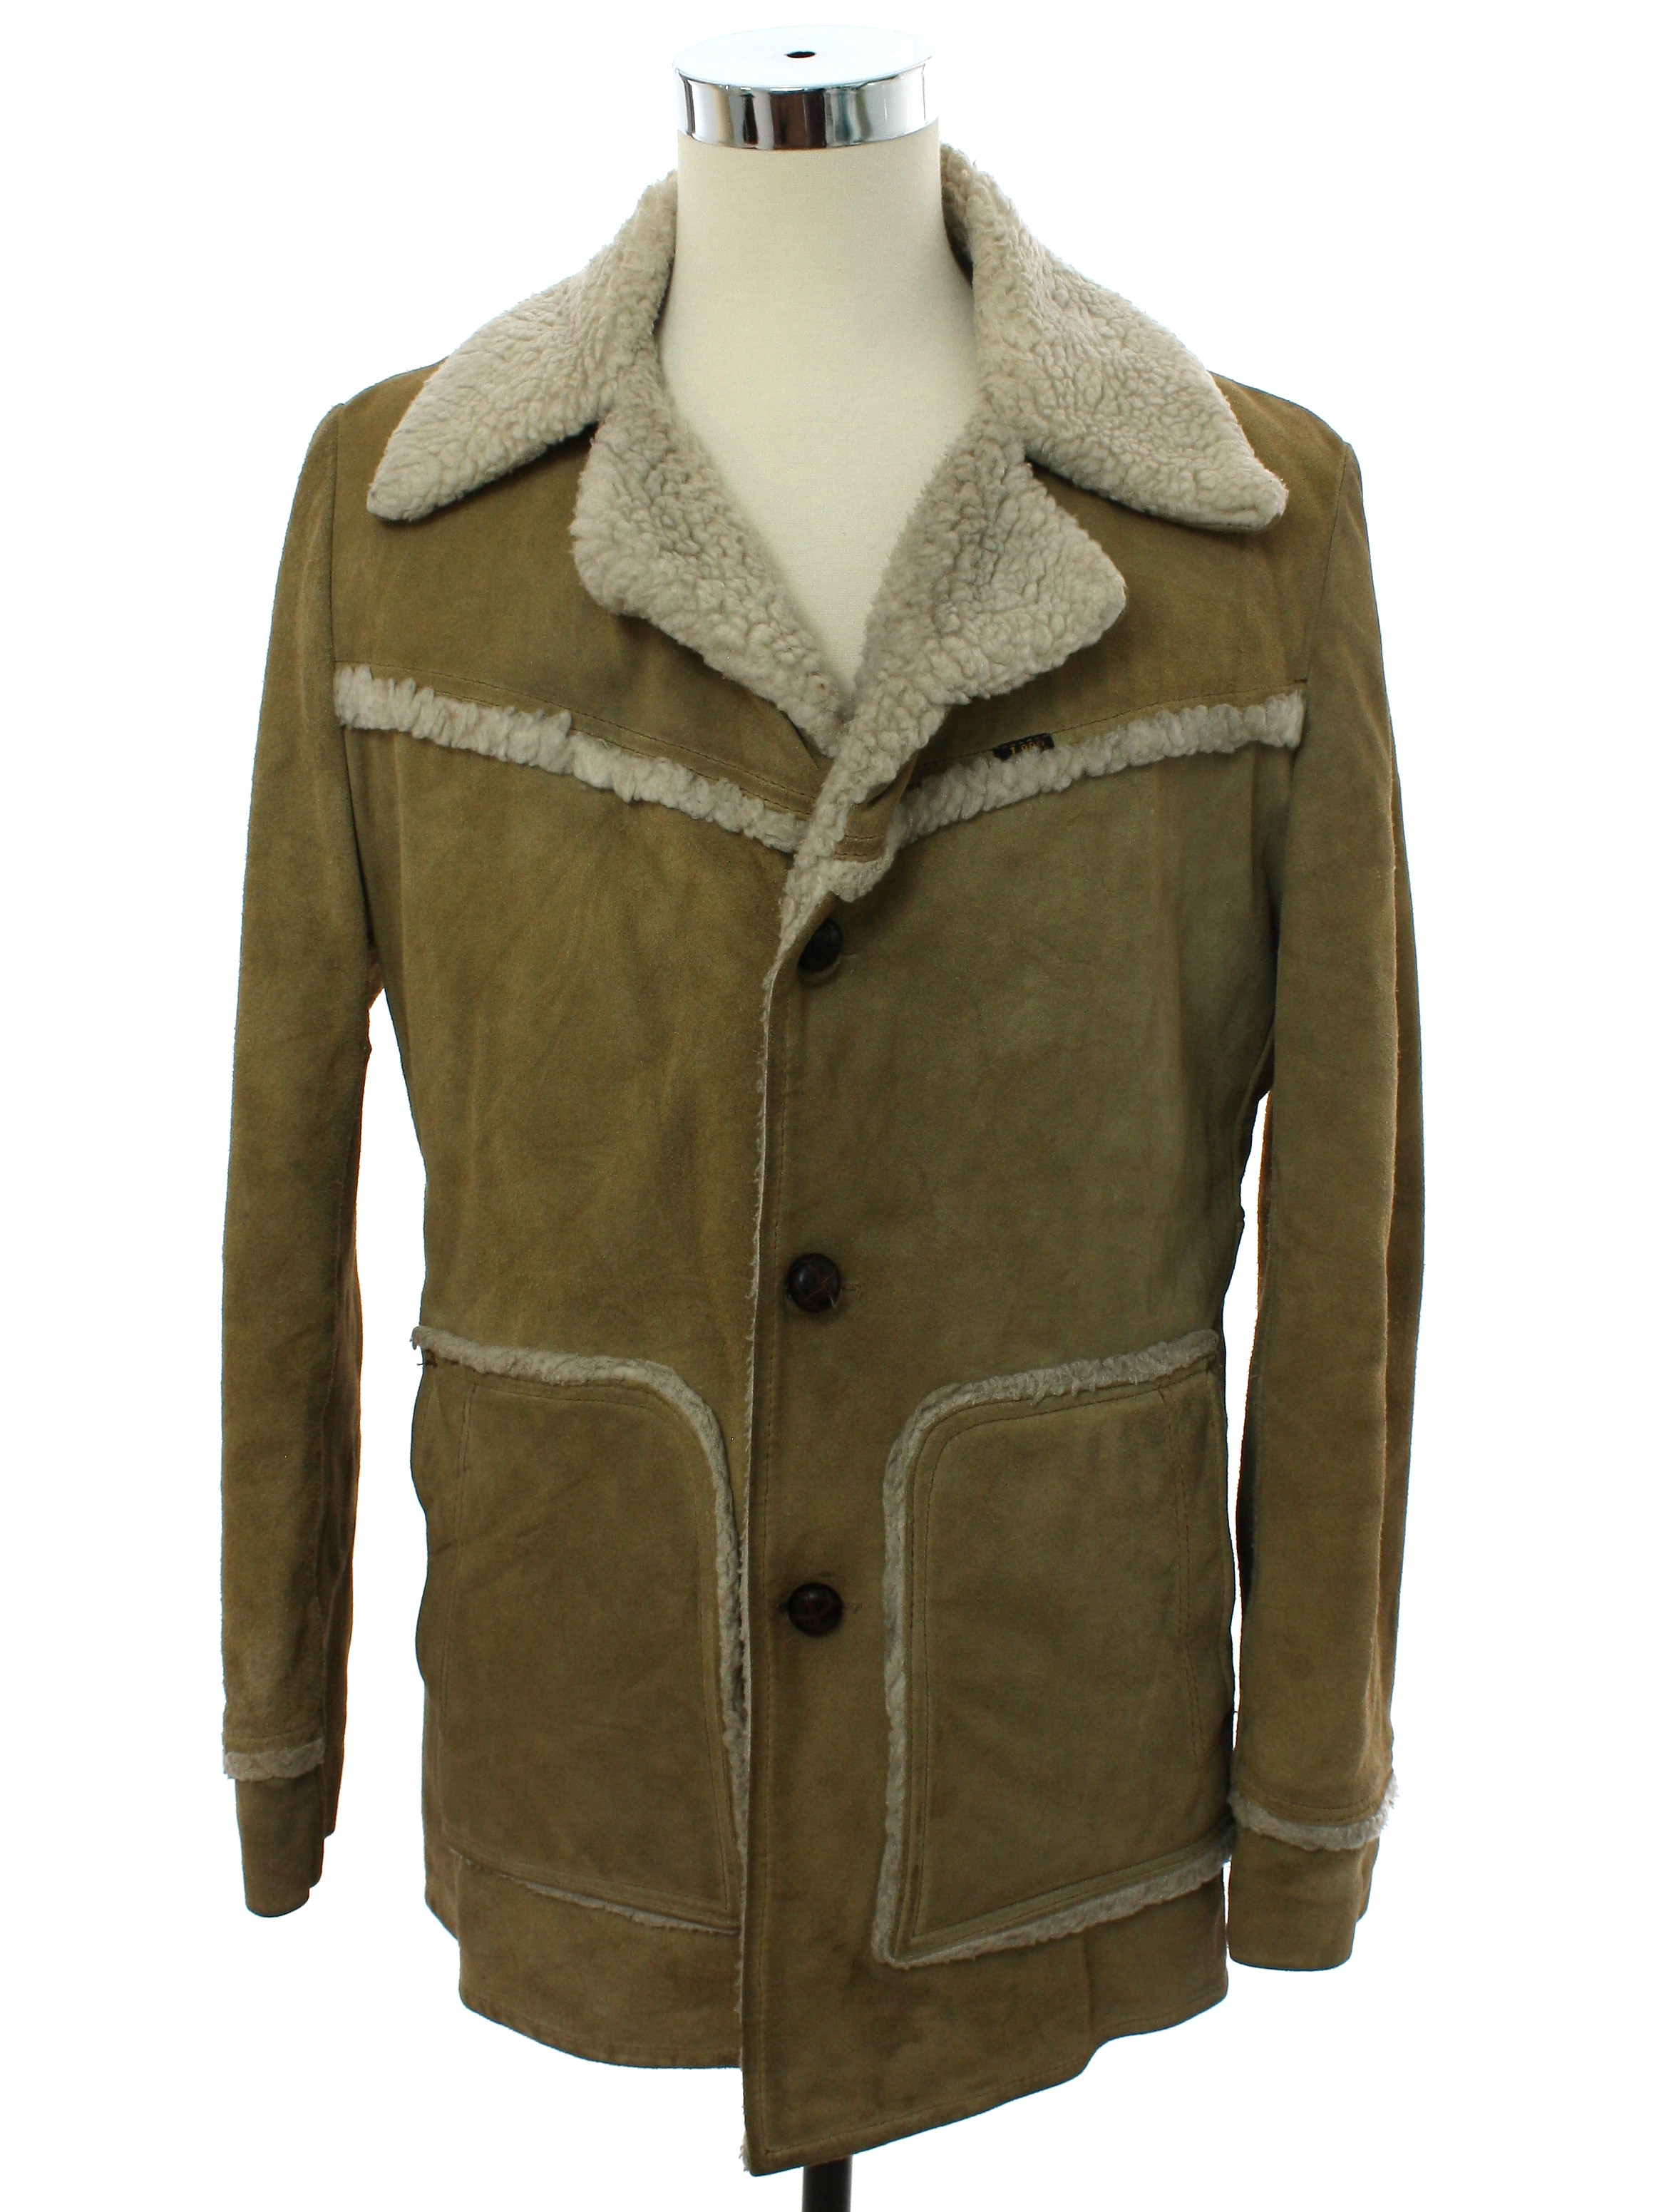 Buy > western style coat > in stock